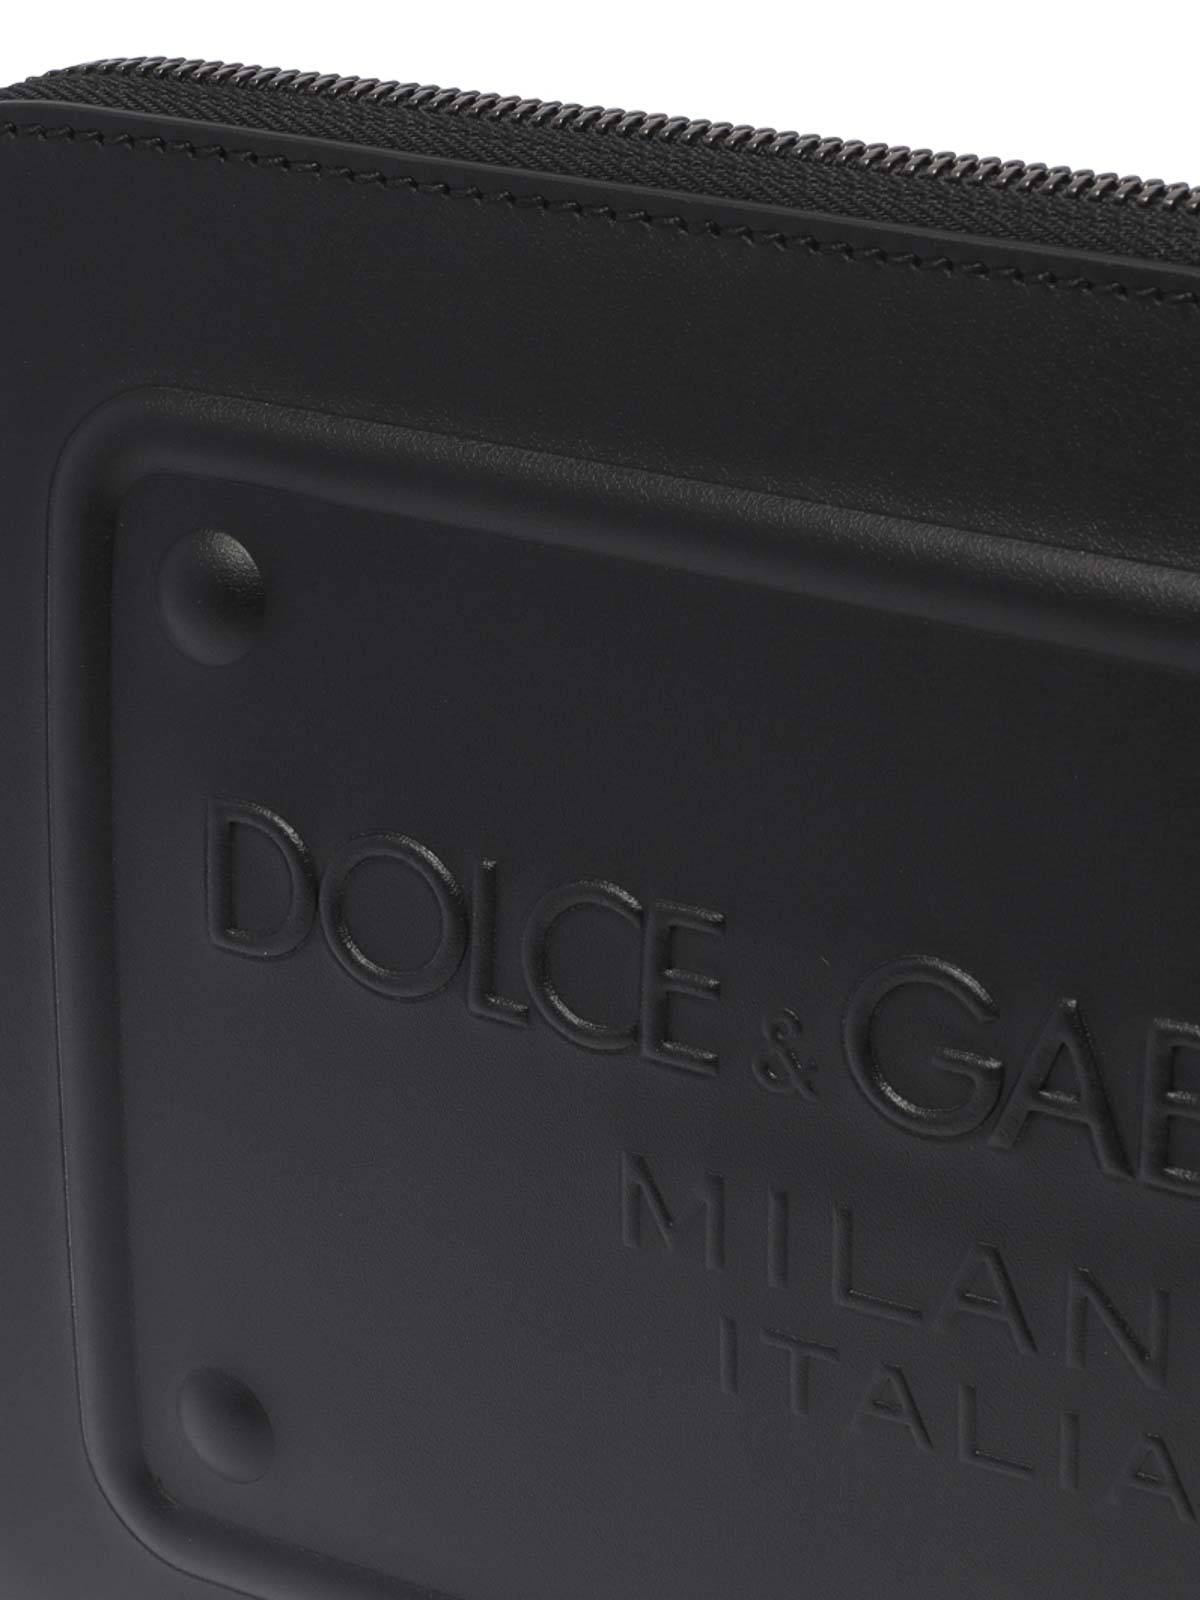 Dolce & Gabbana Metallic Leather Pochette